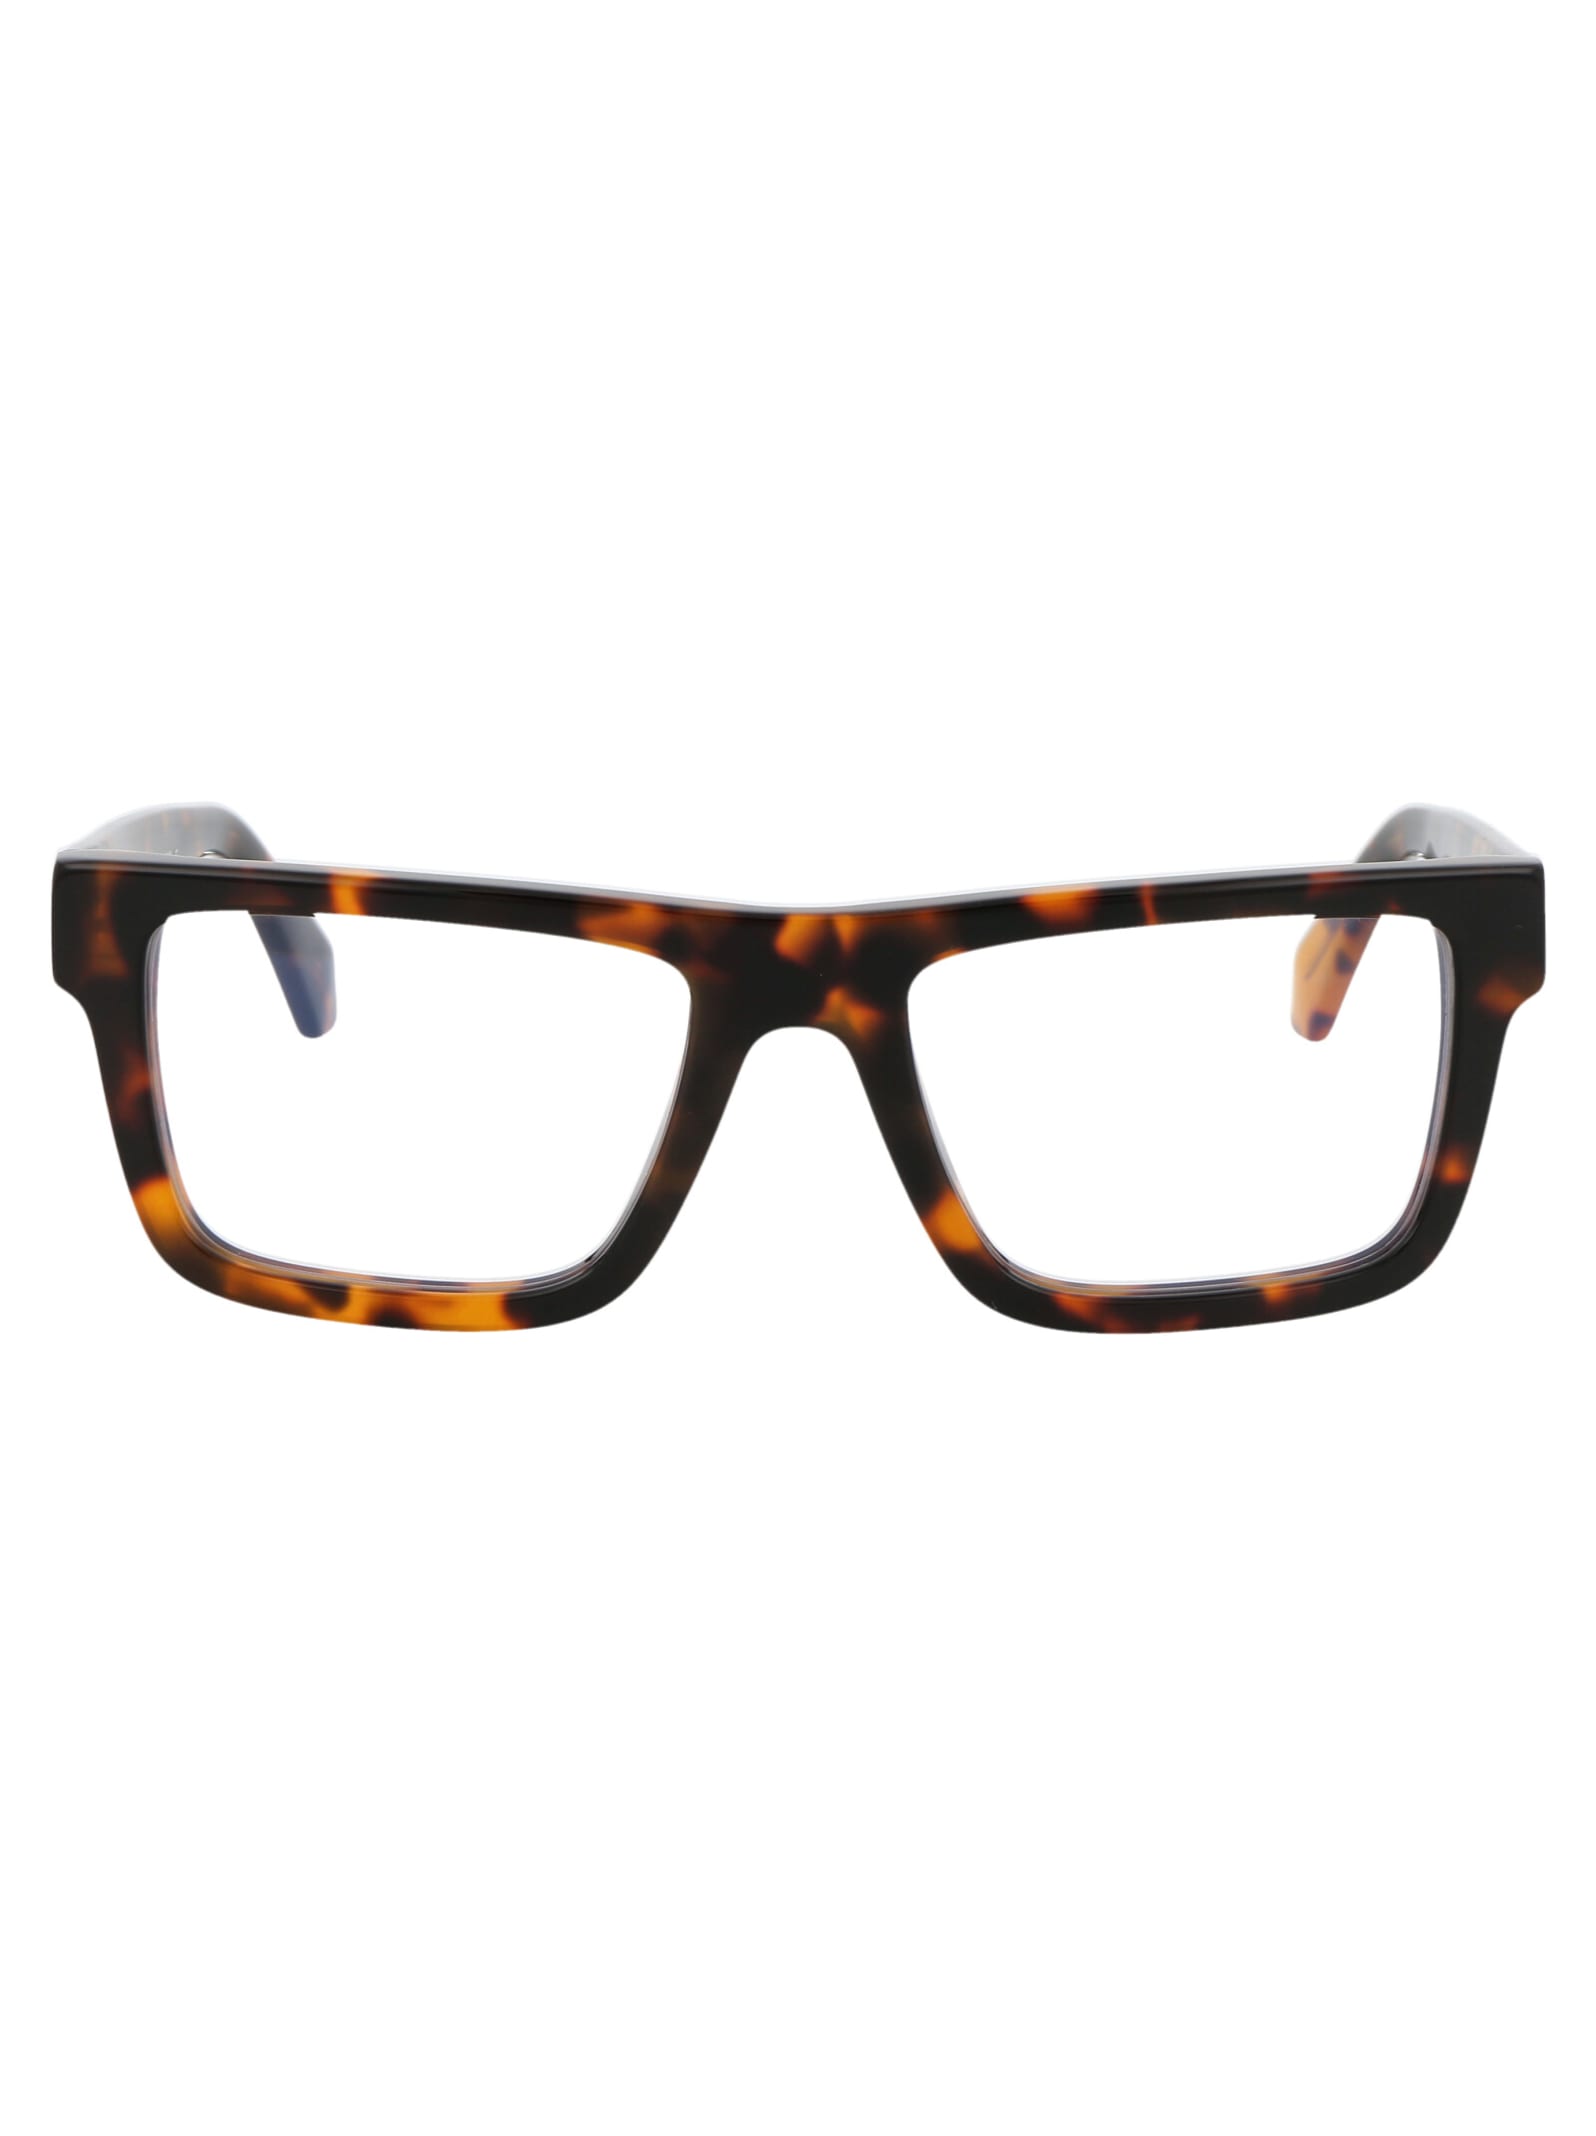 Optical Style 25 Glasses